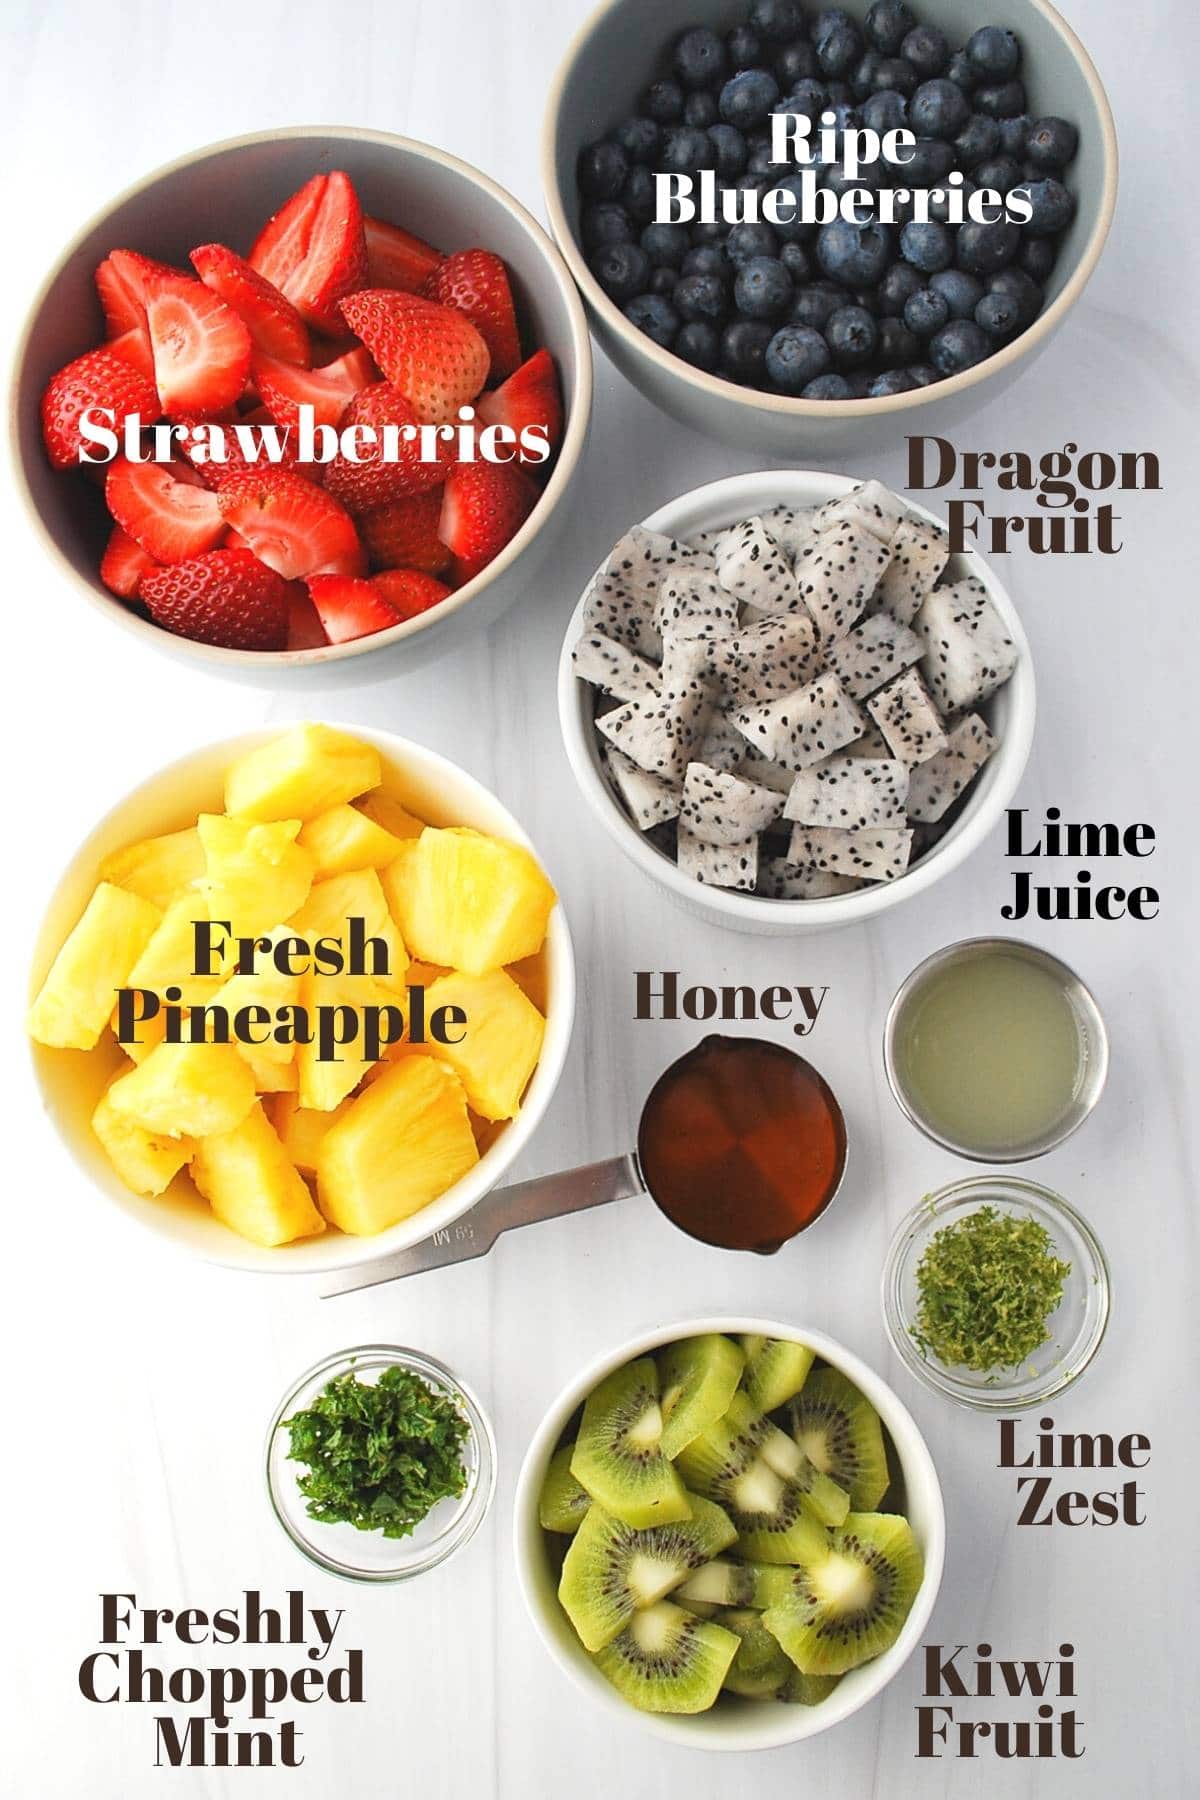 ingredients for dragon fruit salad measured out for preparation